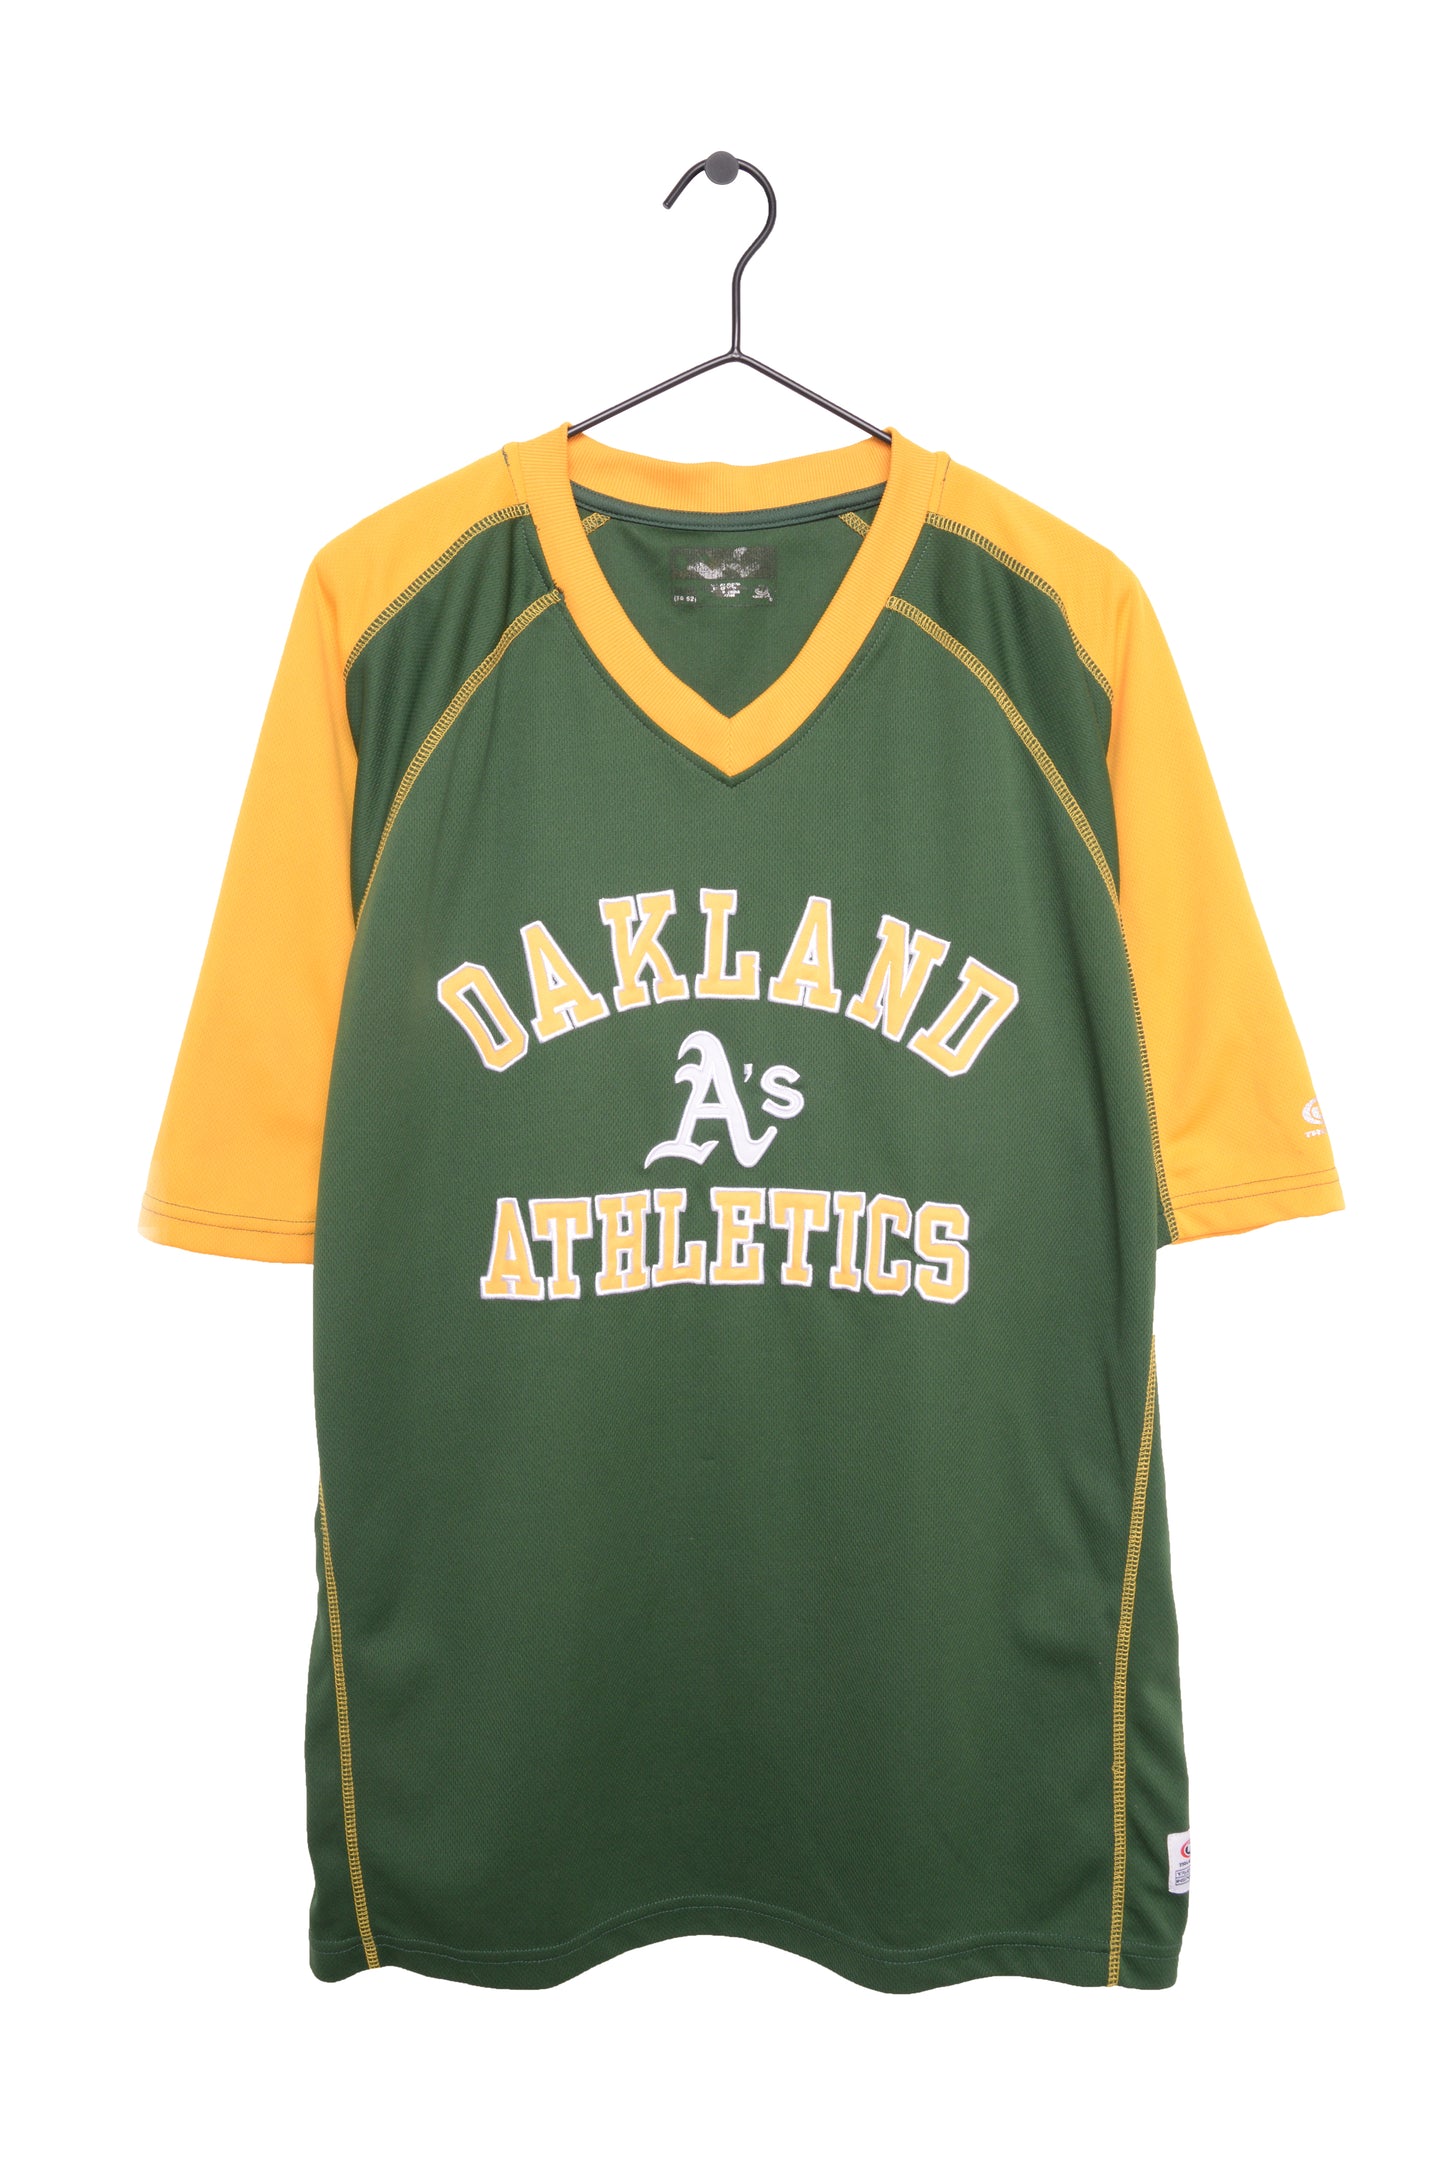 vintage oakland athletics jersey